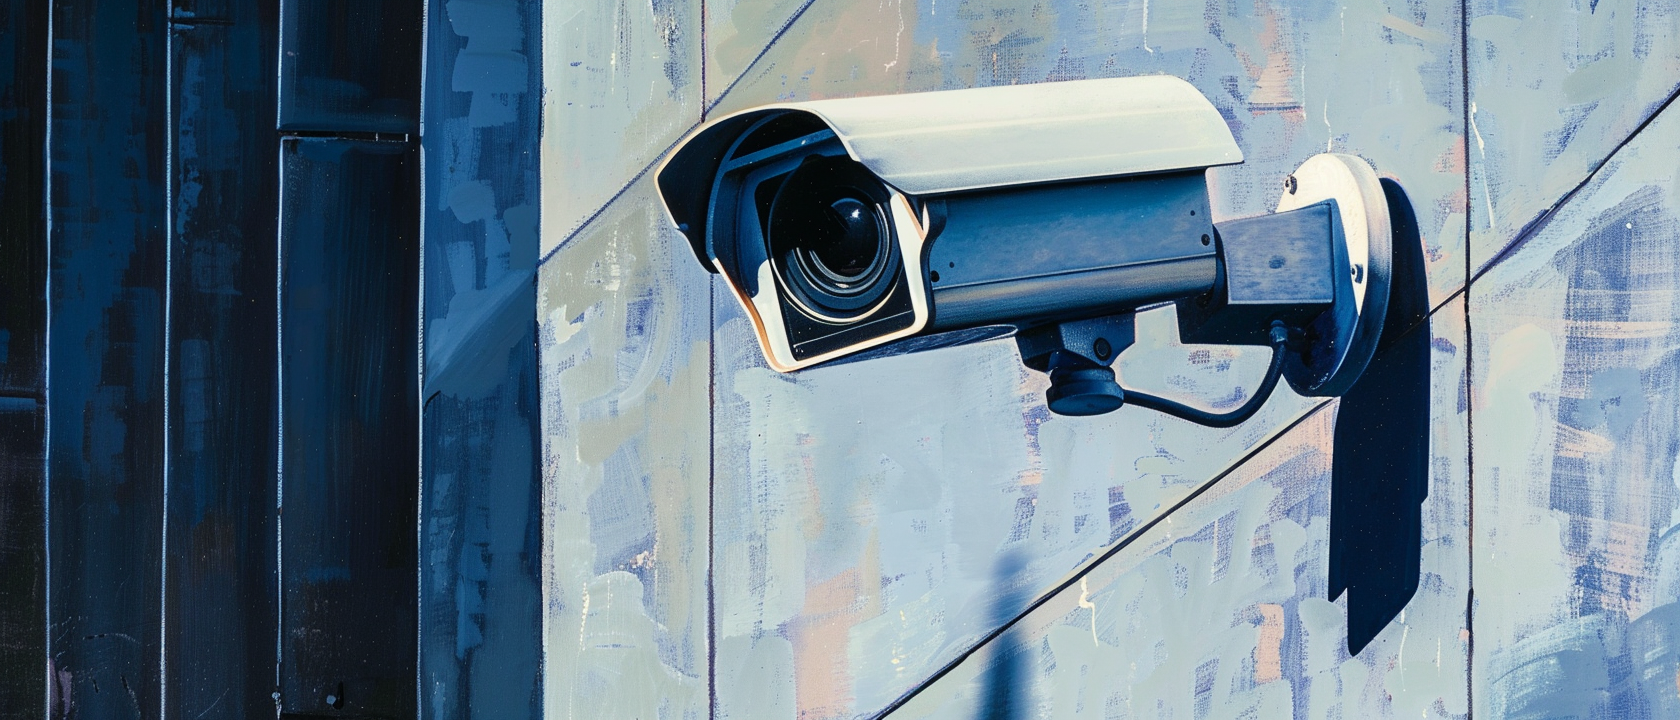 U.S. House Votes to Extend FISA 702 Surveillance 'Reform'